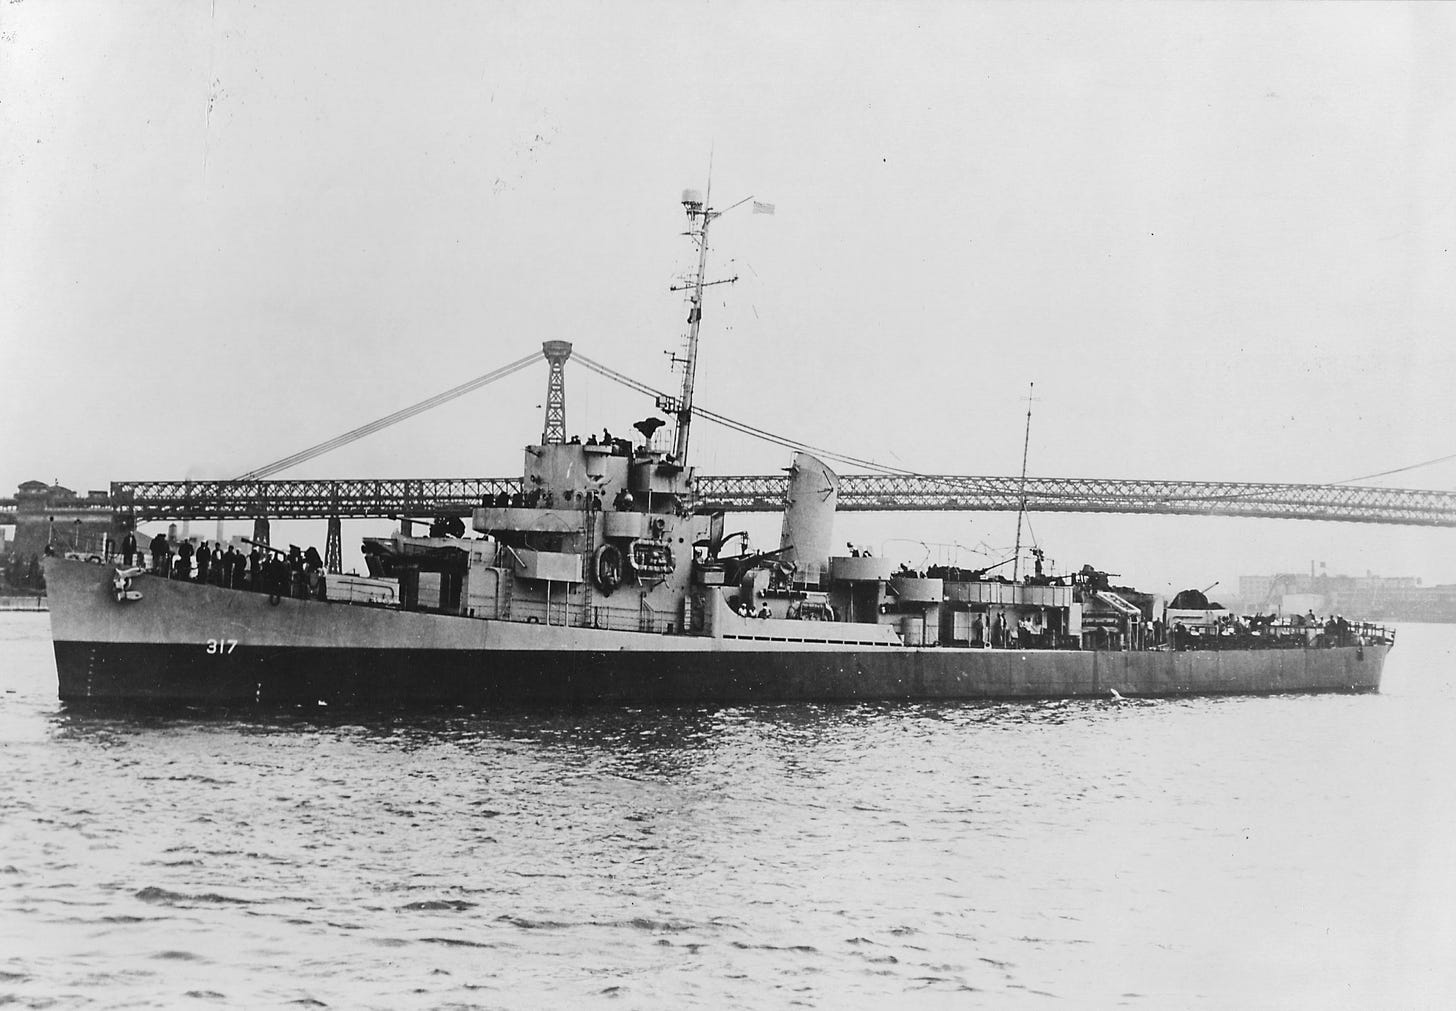 USS Joyce, sister ship to USS Leopold